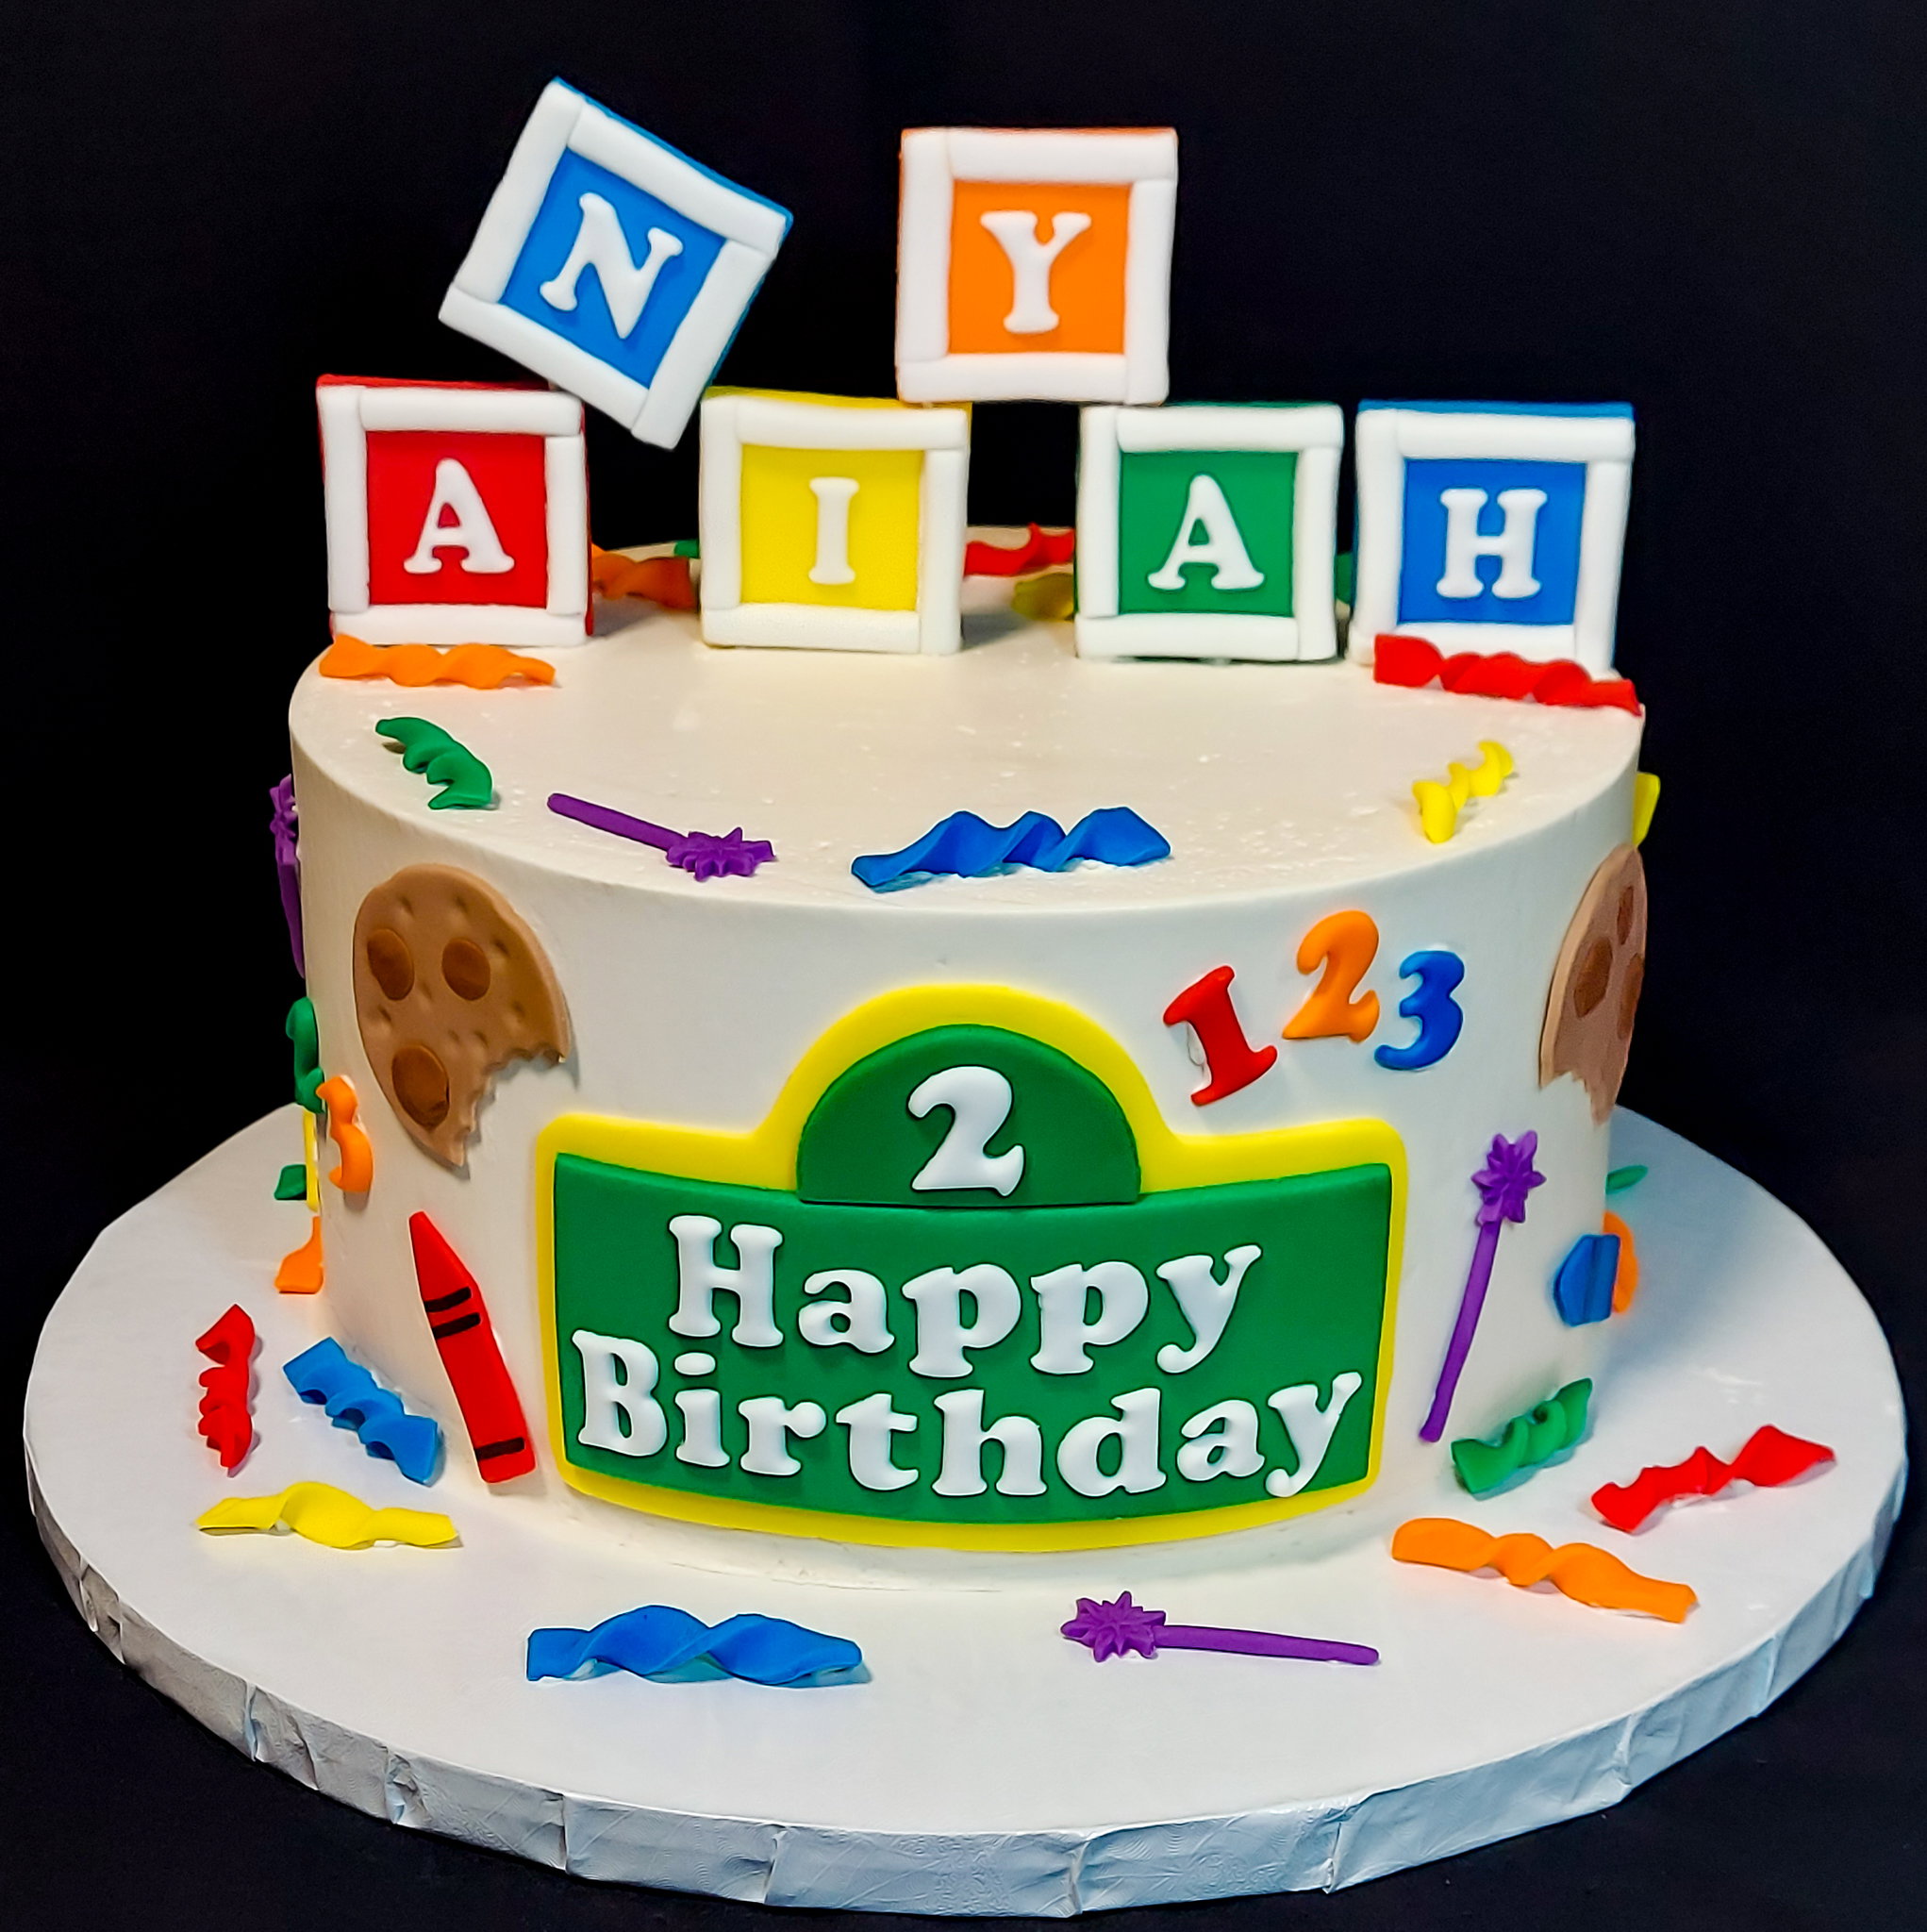 Large Number Cake Molds Birthday Cake Baking Mould Tray 0 1 2 3 4 5 6 7 8 |  Catch.com.au